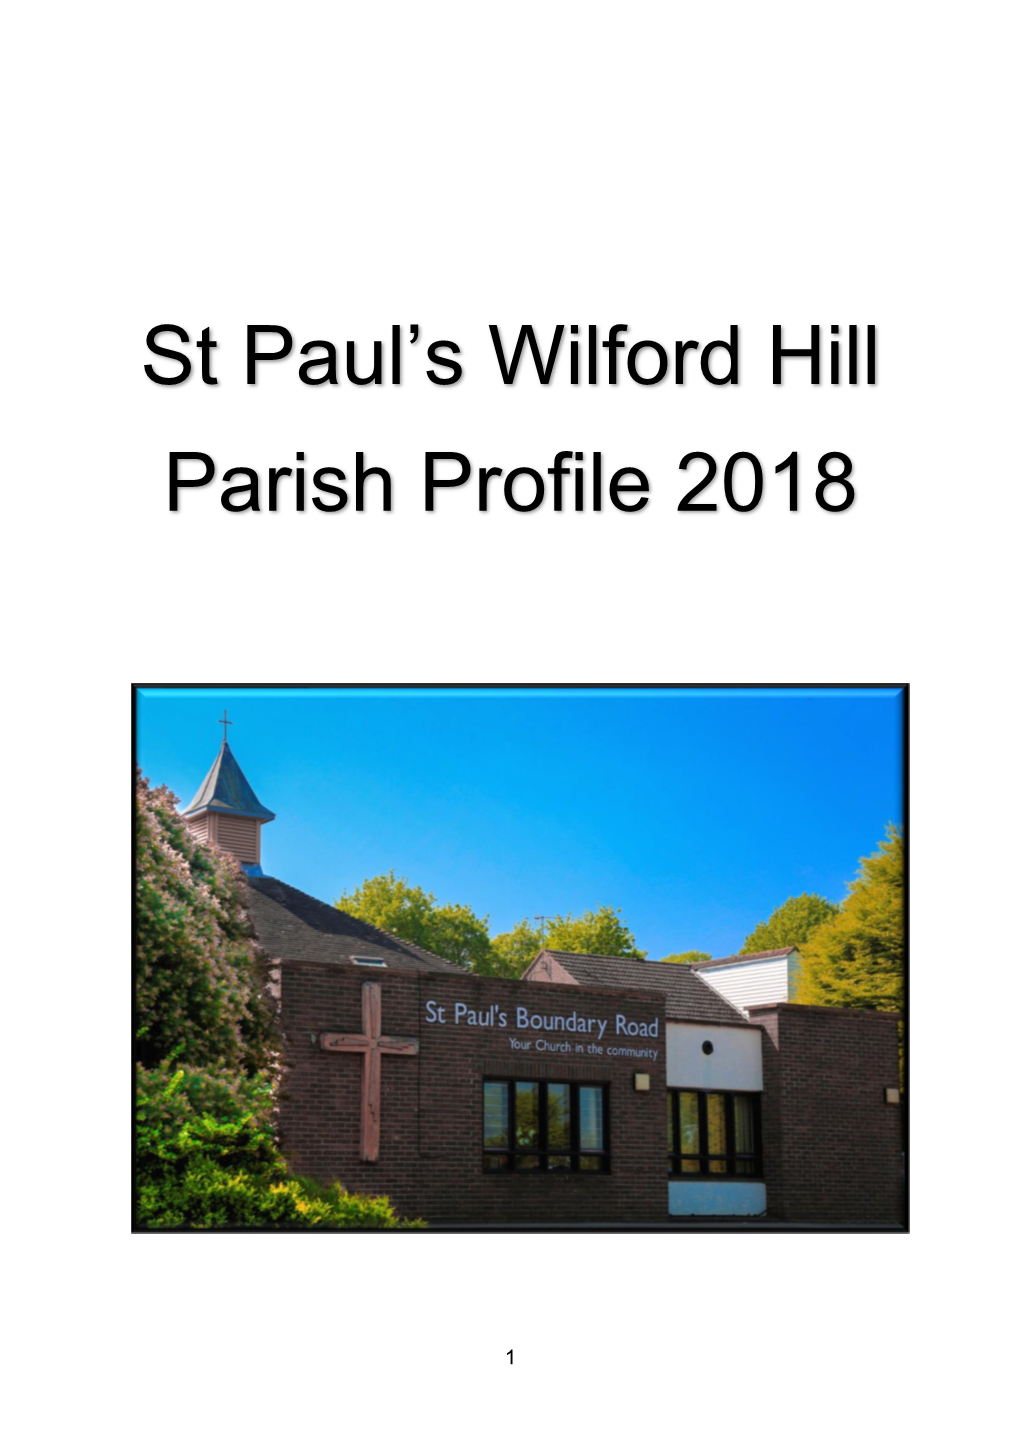 St Paul's Wilford Hill Parish Profile 2018